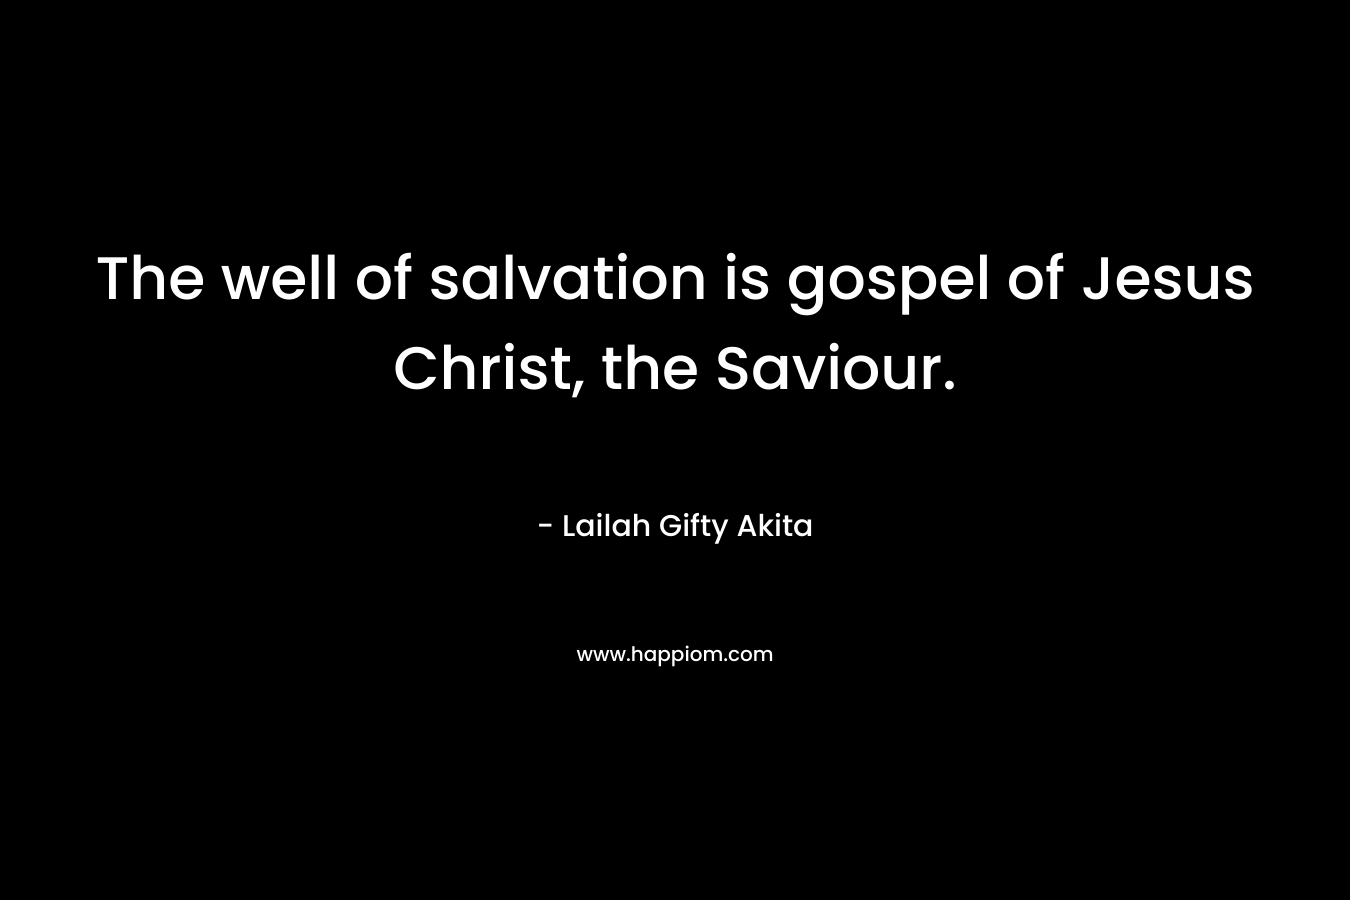 The well of salvation is gospel of Jesus Christ, the Saviour.